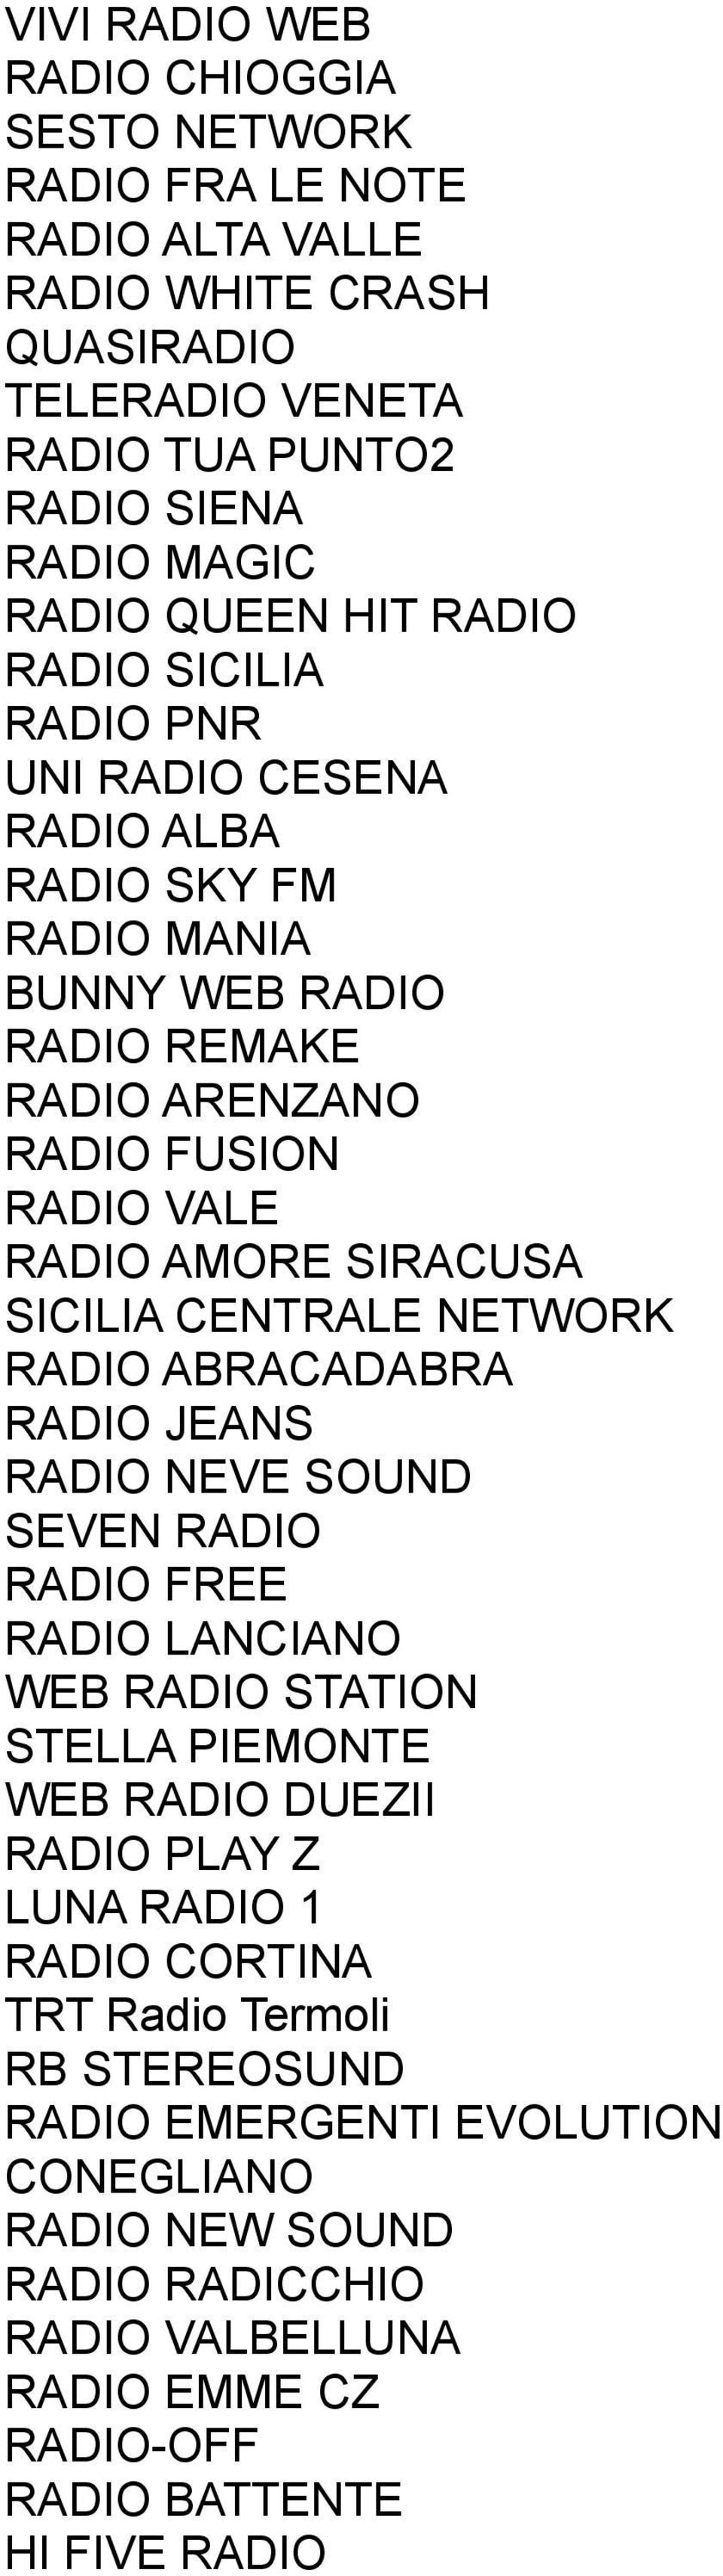 CENTRALE NETWORK RADIO ABRACADABRA RADIO JEANS RADIO NEVE SOUND SEVEN RADIO RADIO FREE RADIO LANCIANO WEB RADIO STATION STELLA PIEMONTE WEB RADIO DUEZII RADIO PLAY Z LUNA RADIO 1